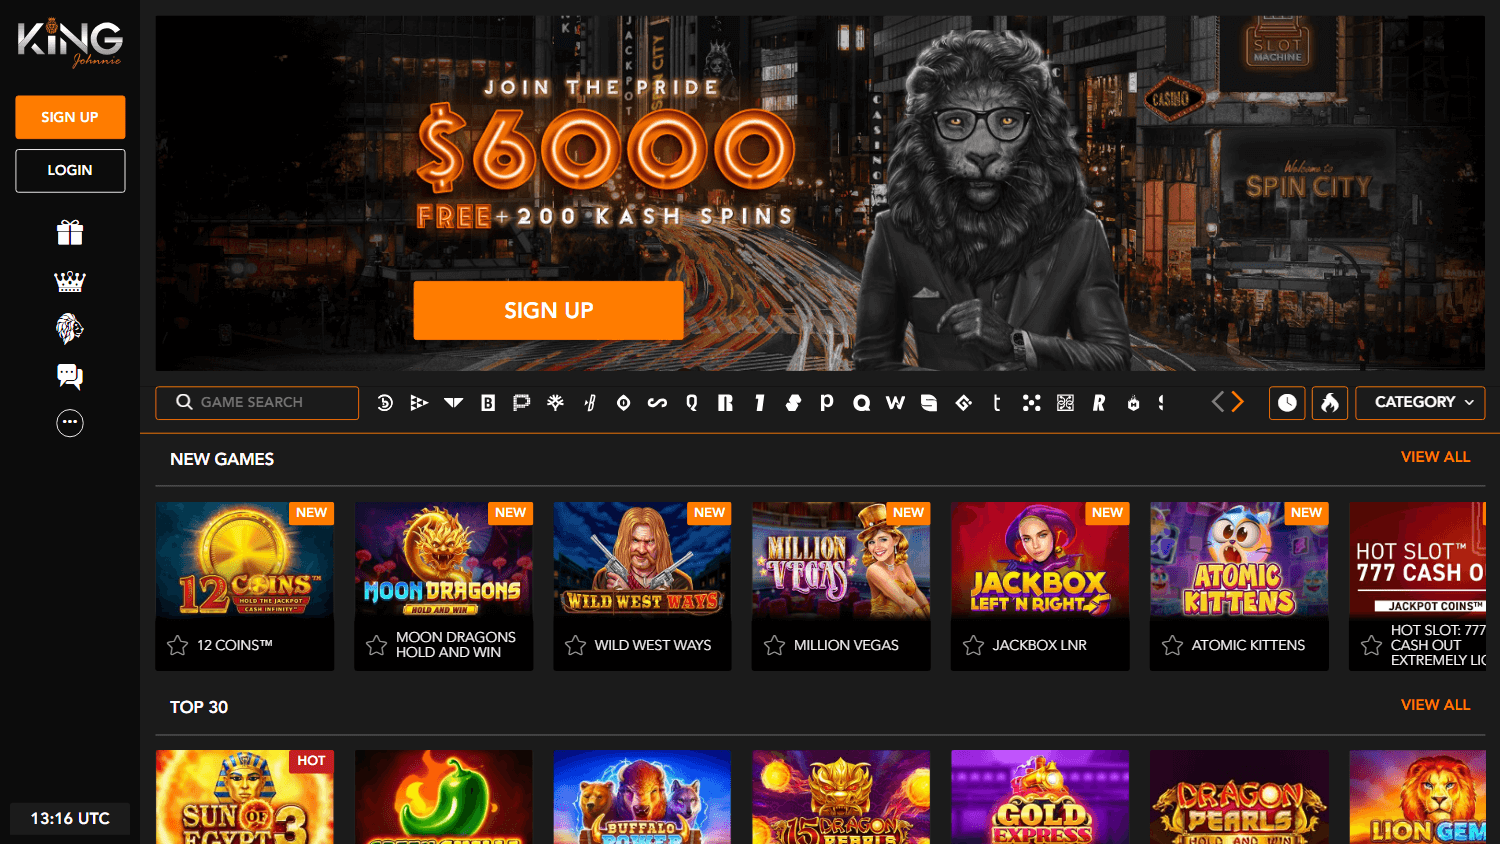 king_johnnie_casino_homepage_desktop